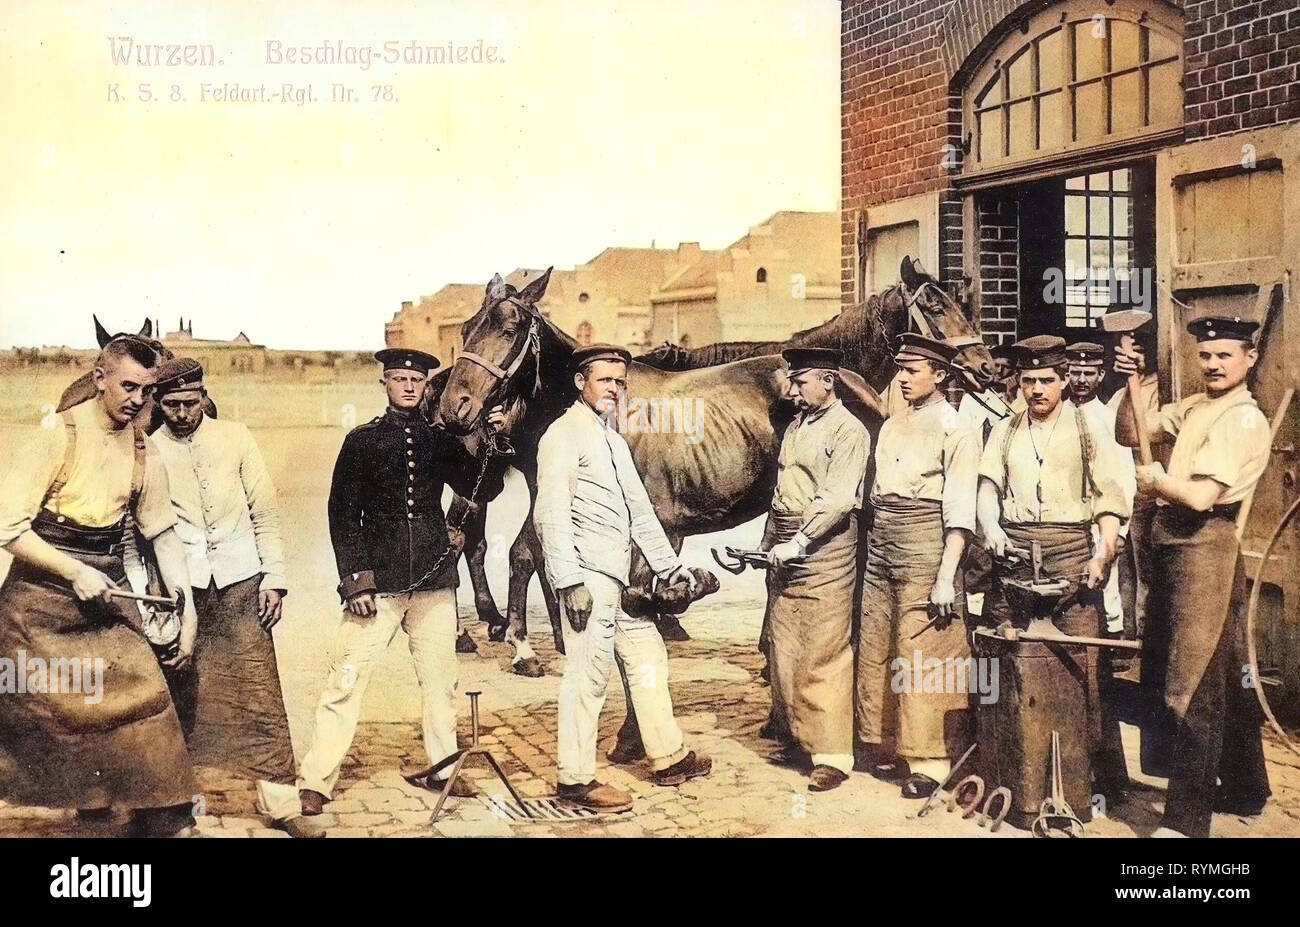 Farriers, Forges in Saxony, 8. Königlich Sächsisches Feldartillerie-Regiment Nr. 78, Military use of horses, Military facilities of Germany, 1908, Landkreis Leipzig, Wurzen, Beschlag Schmiede Stock Photo